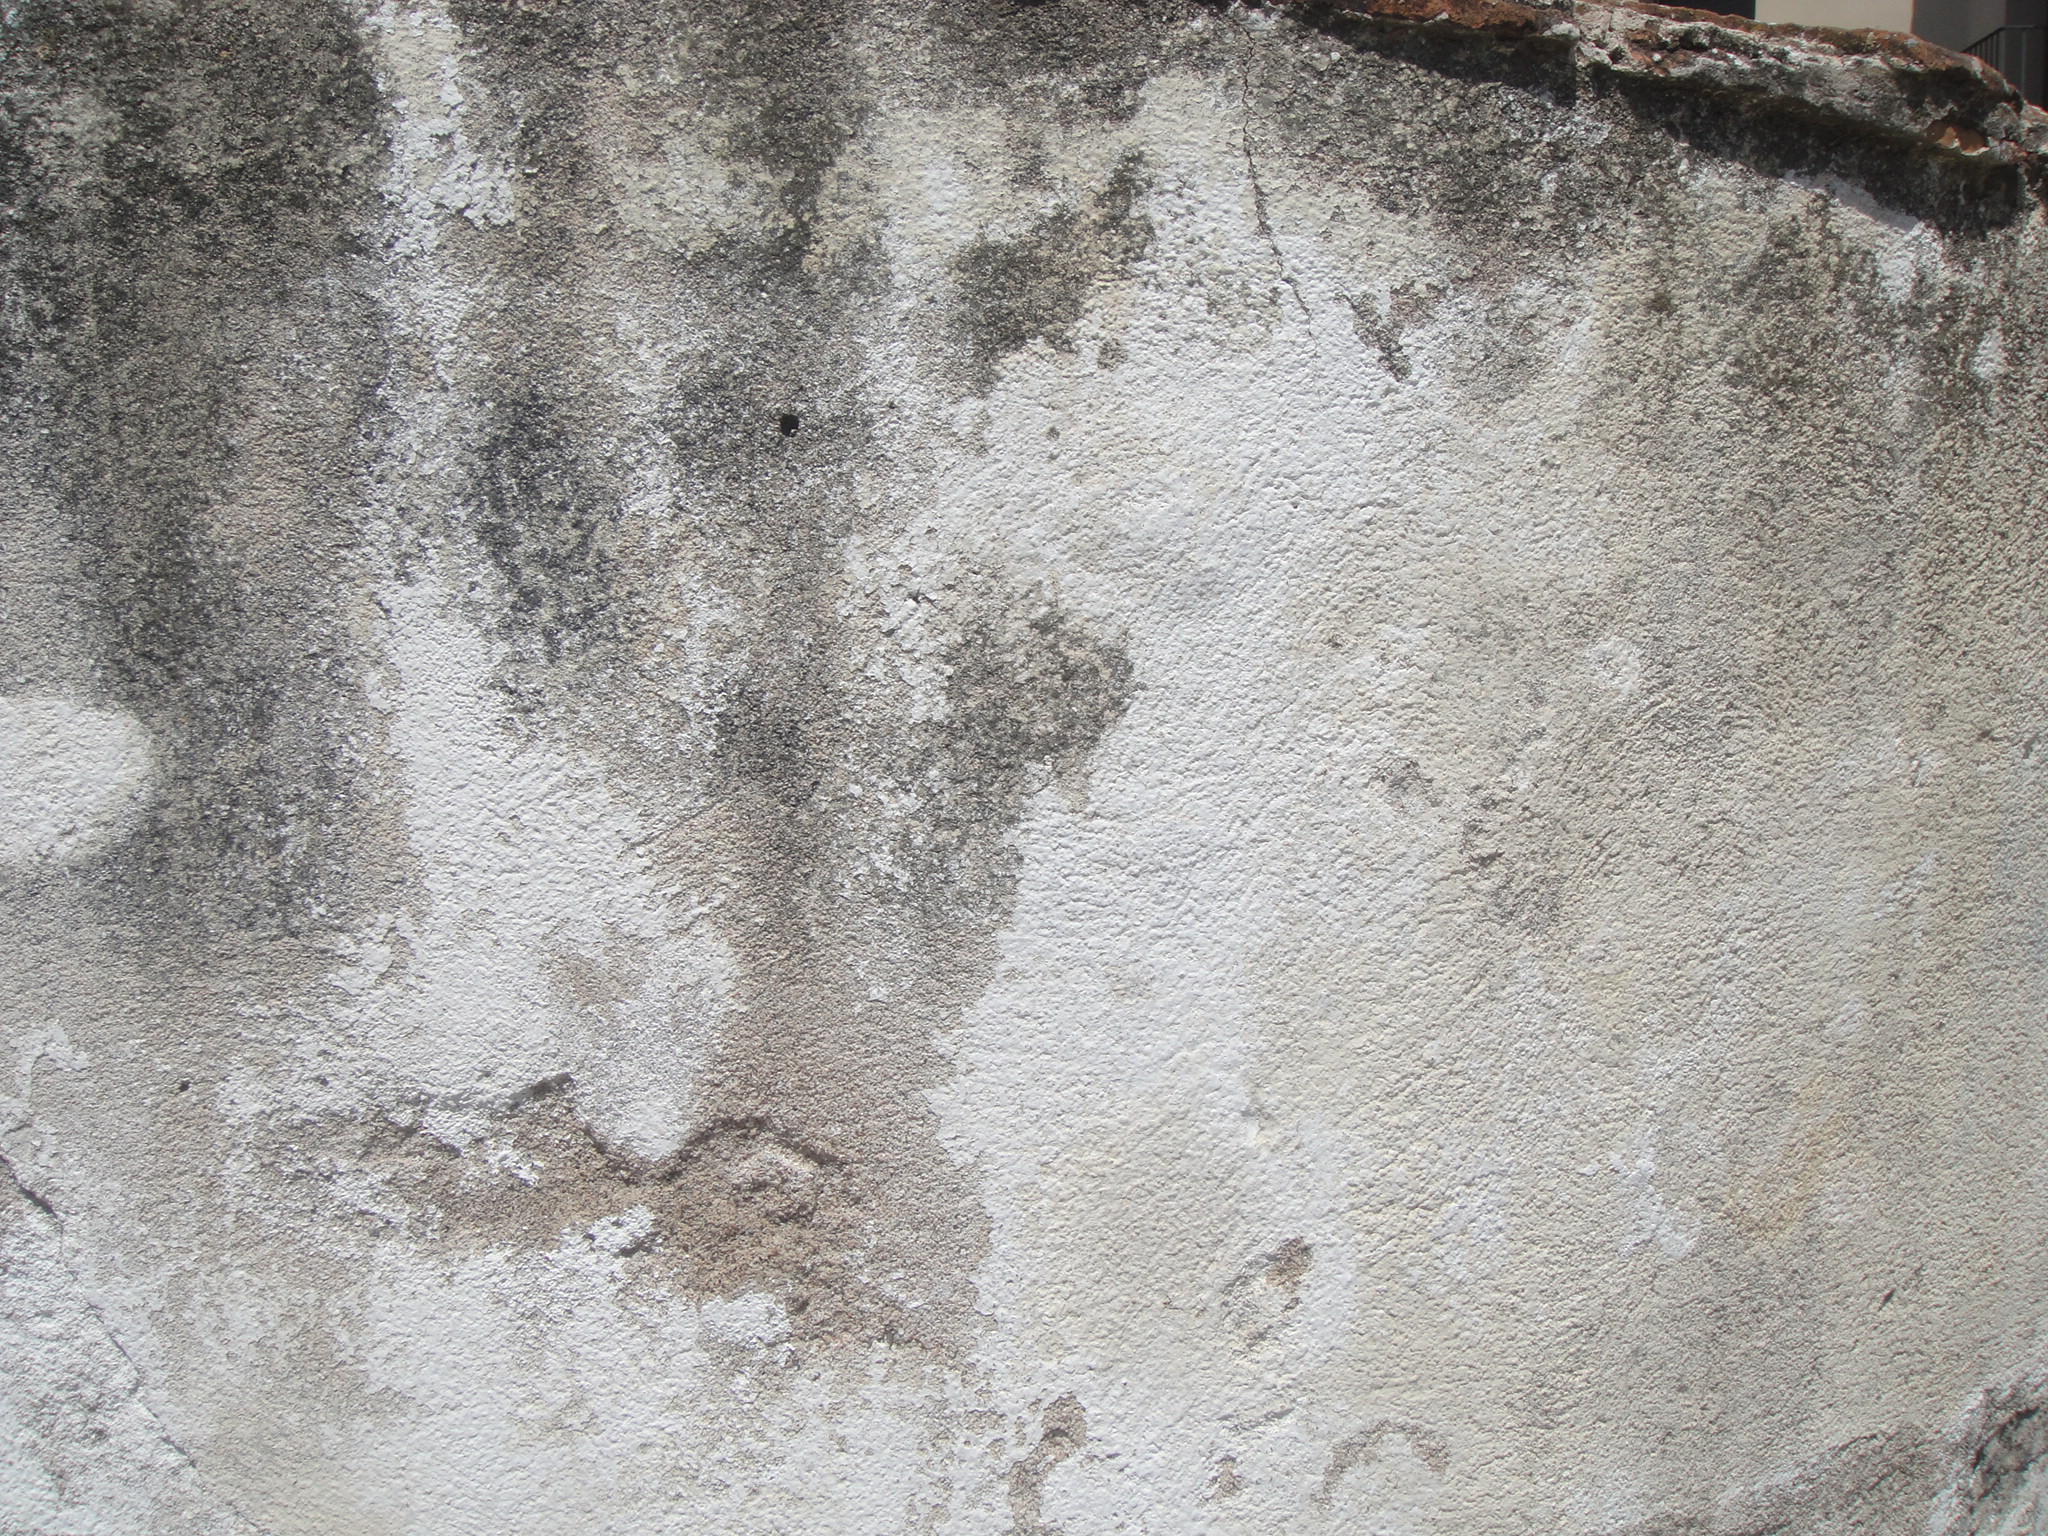 Grunge concrete wall photo